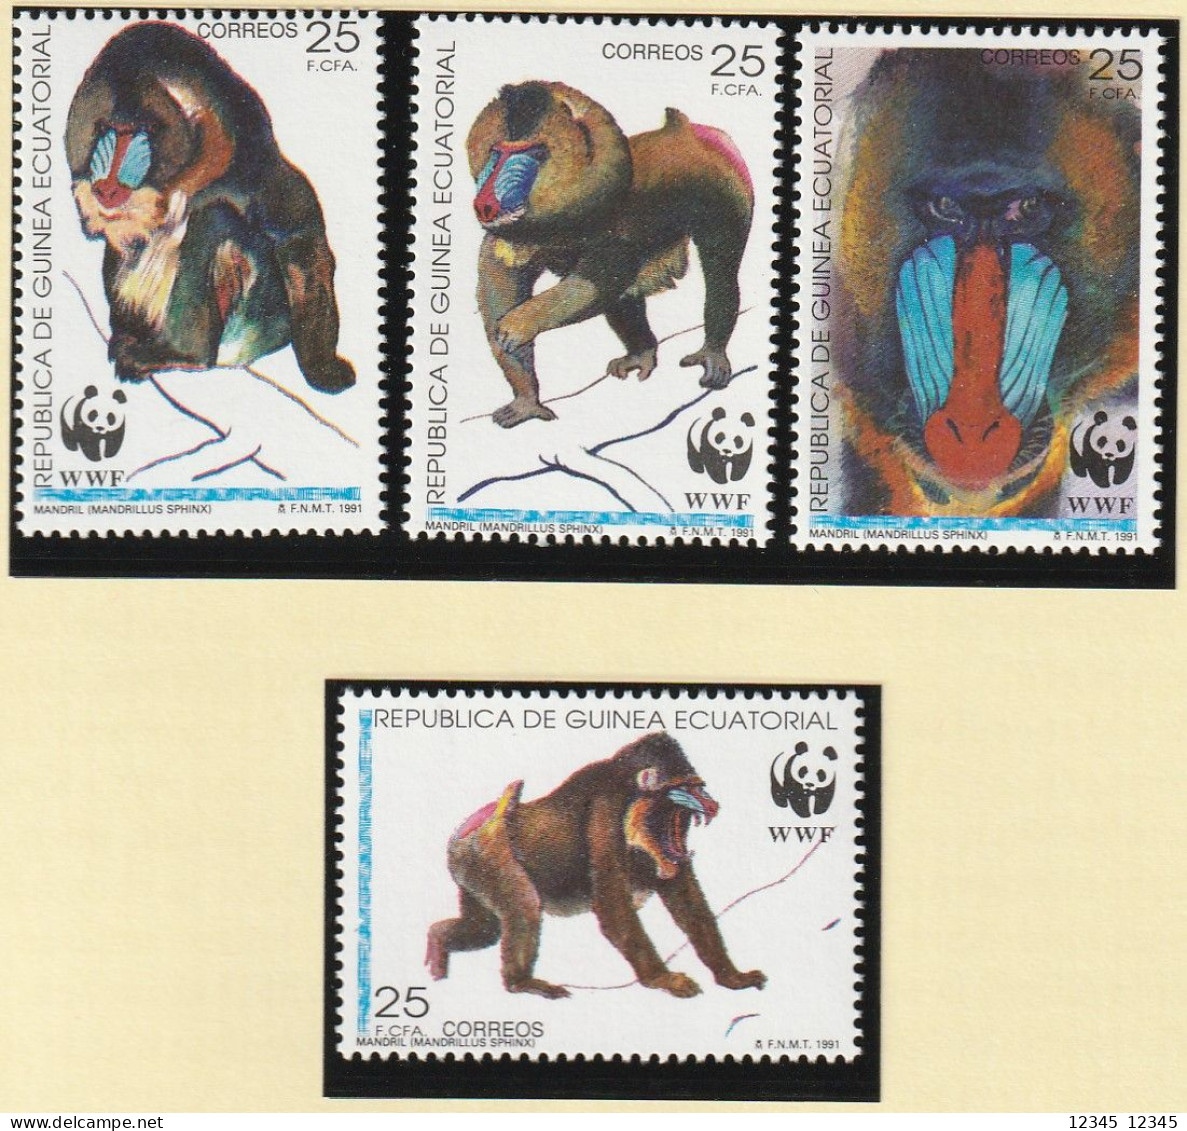 Equatoriaal Guinea 1991, Postfris MNH, WWF, Mandrill - Equatoriaal Guinea